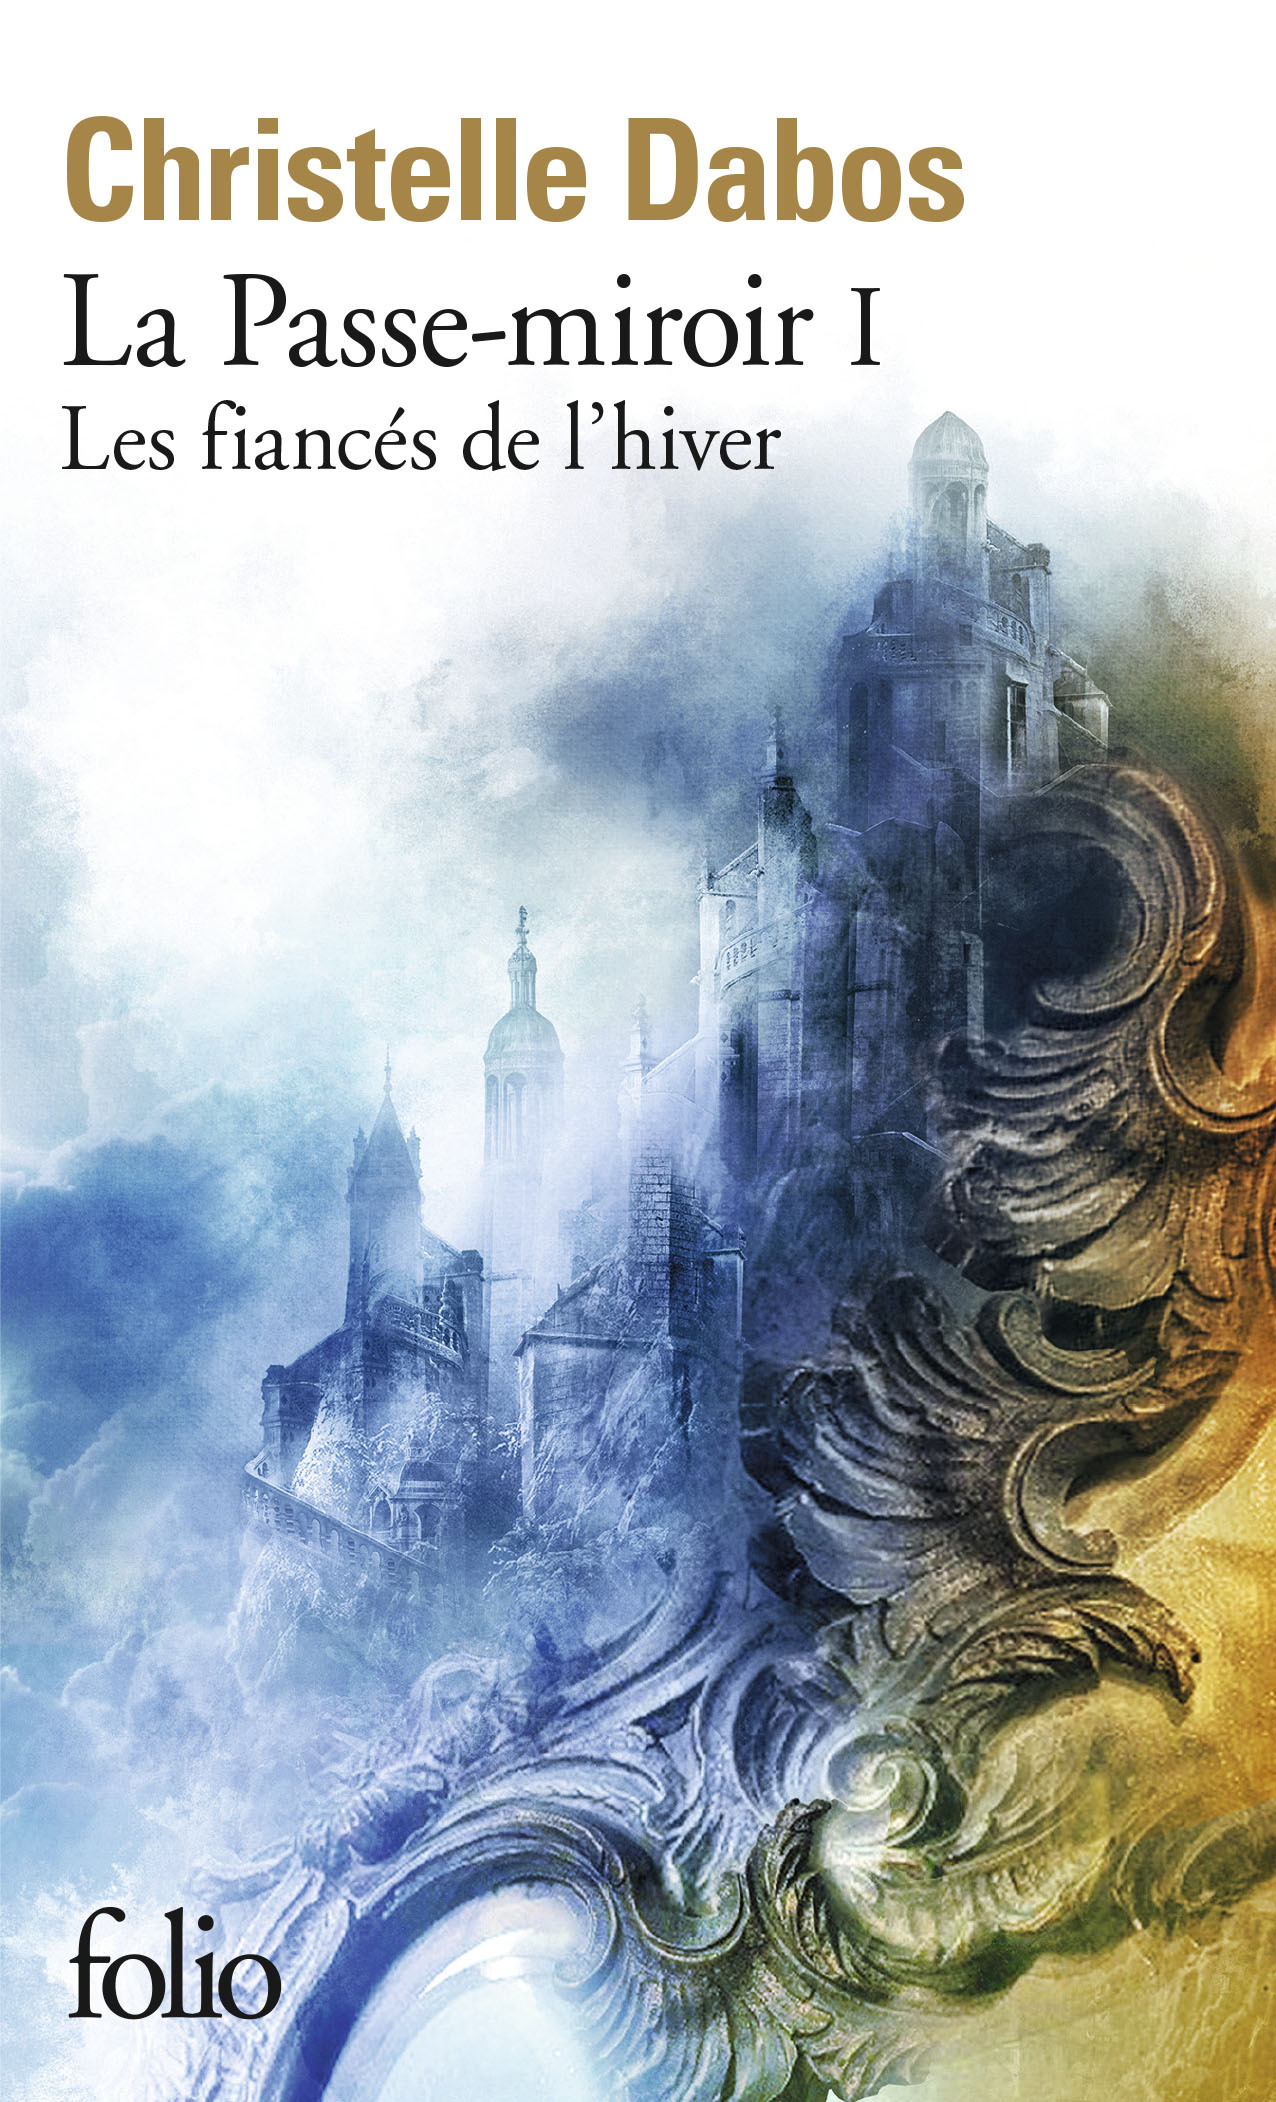 Les fiancés de l'hiver, LES FIANCES DE L'HIVER (9782072957871-front-cover)